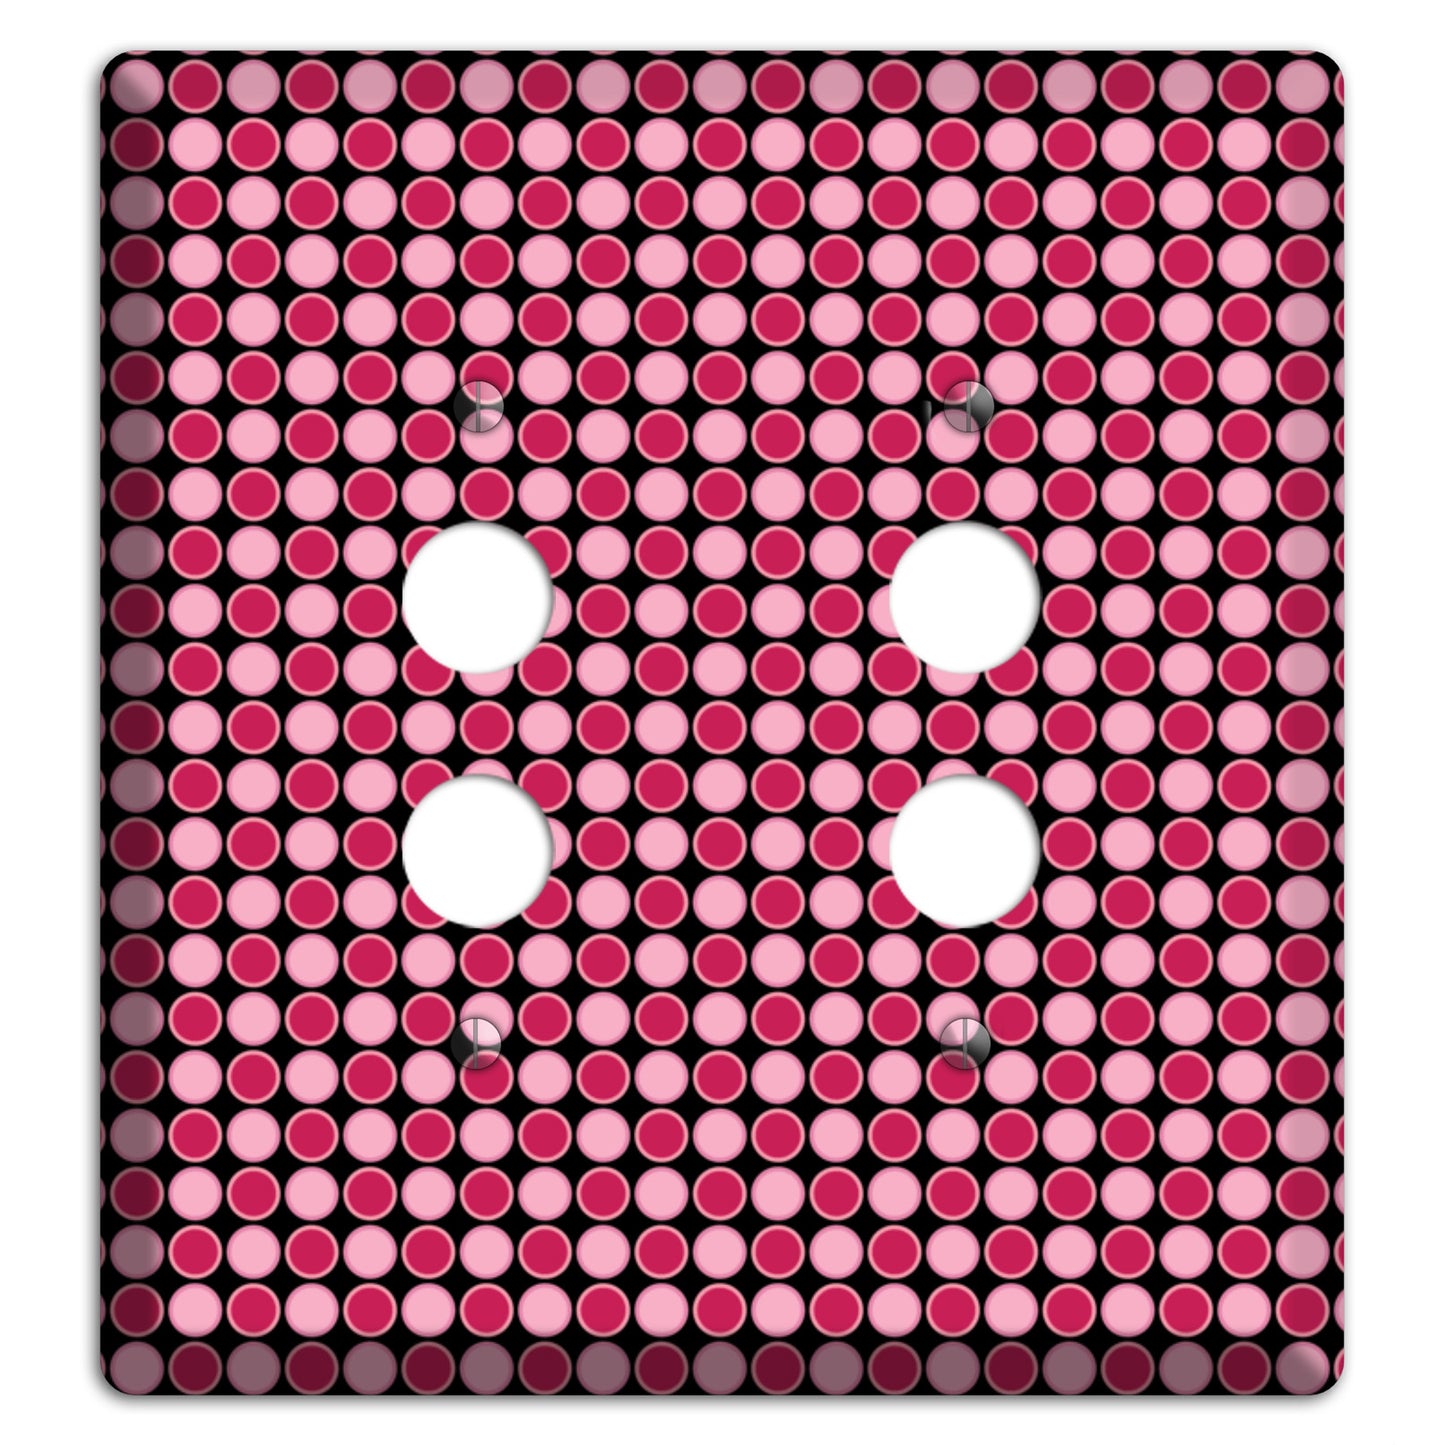 Fuschia and Pink Tiled Dots 2 Pushbutton Wallplate